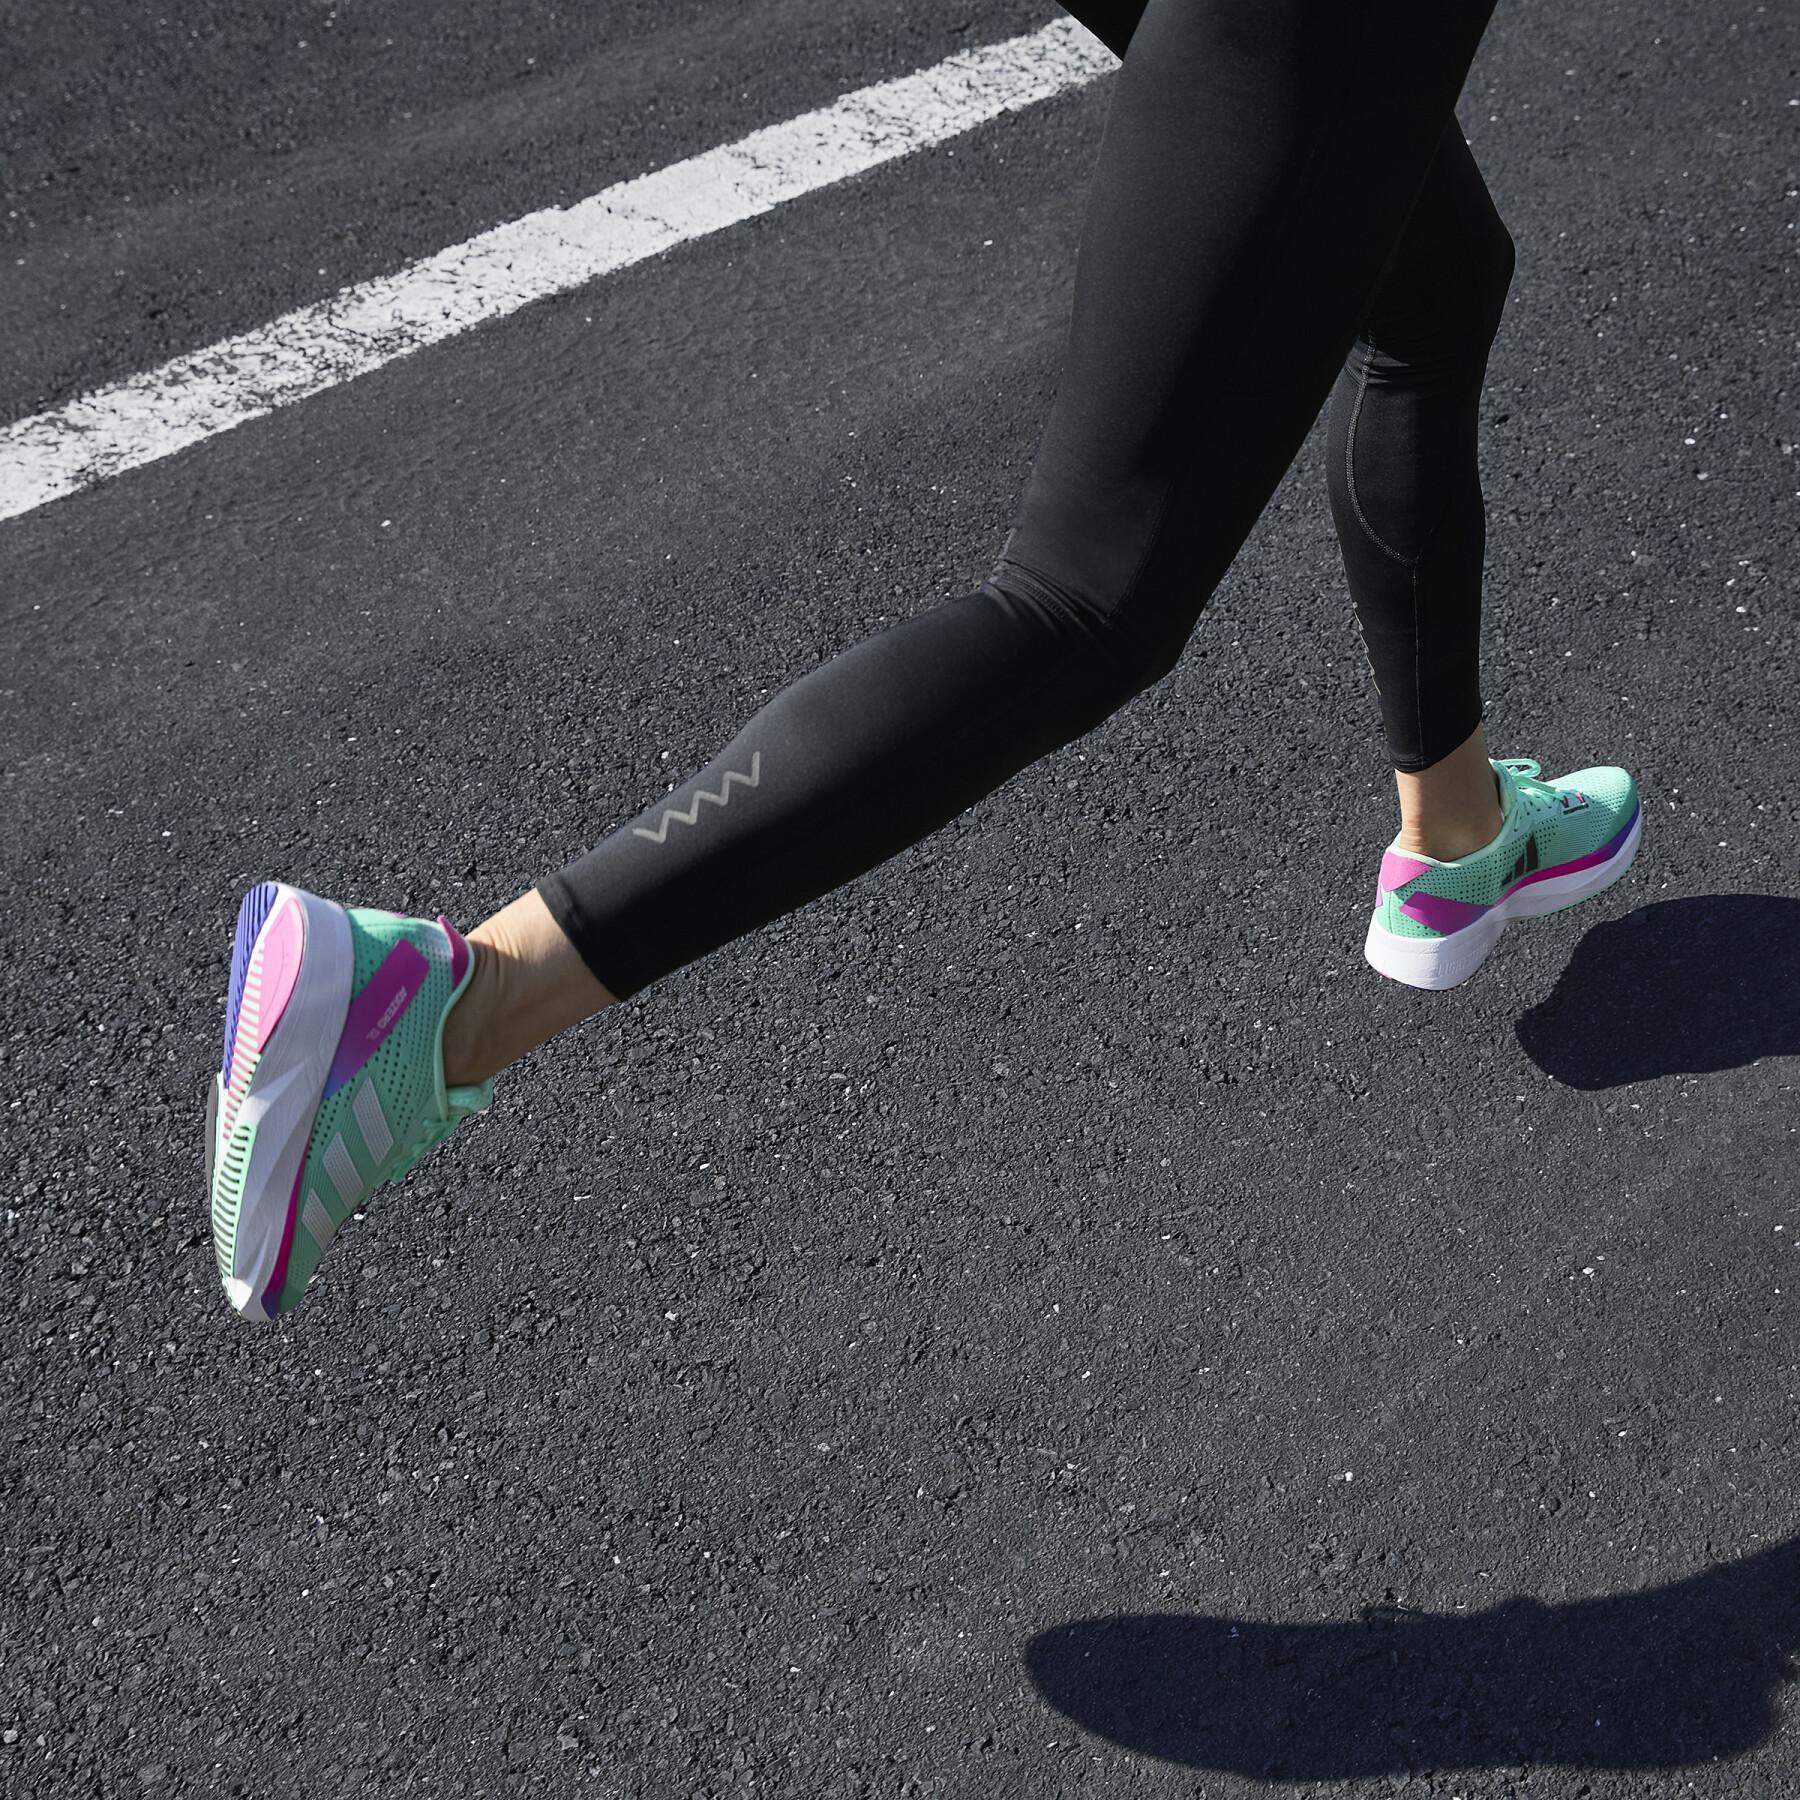 Chaussures de running femme adidas Adizero SL